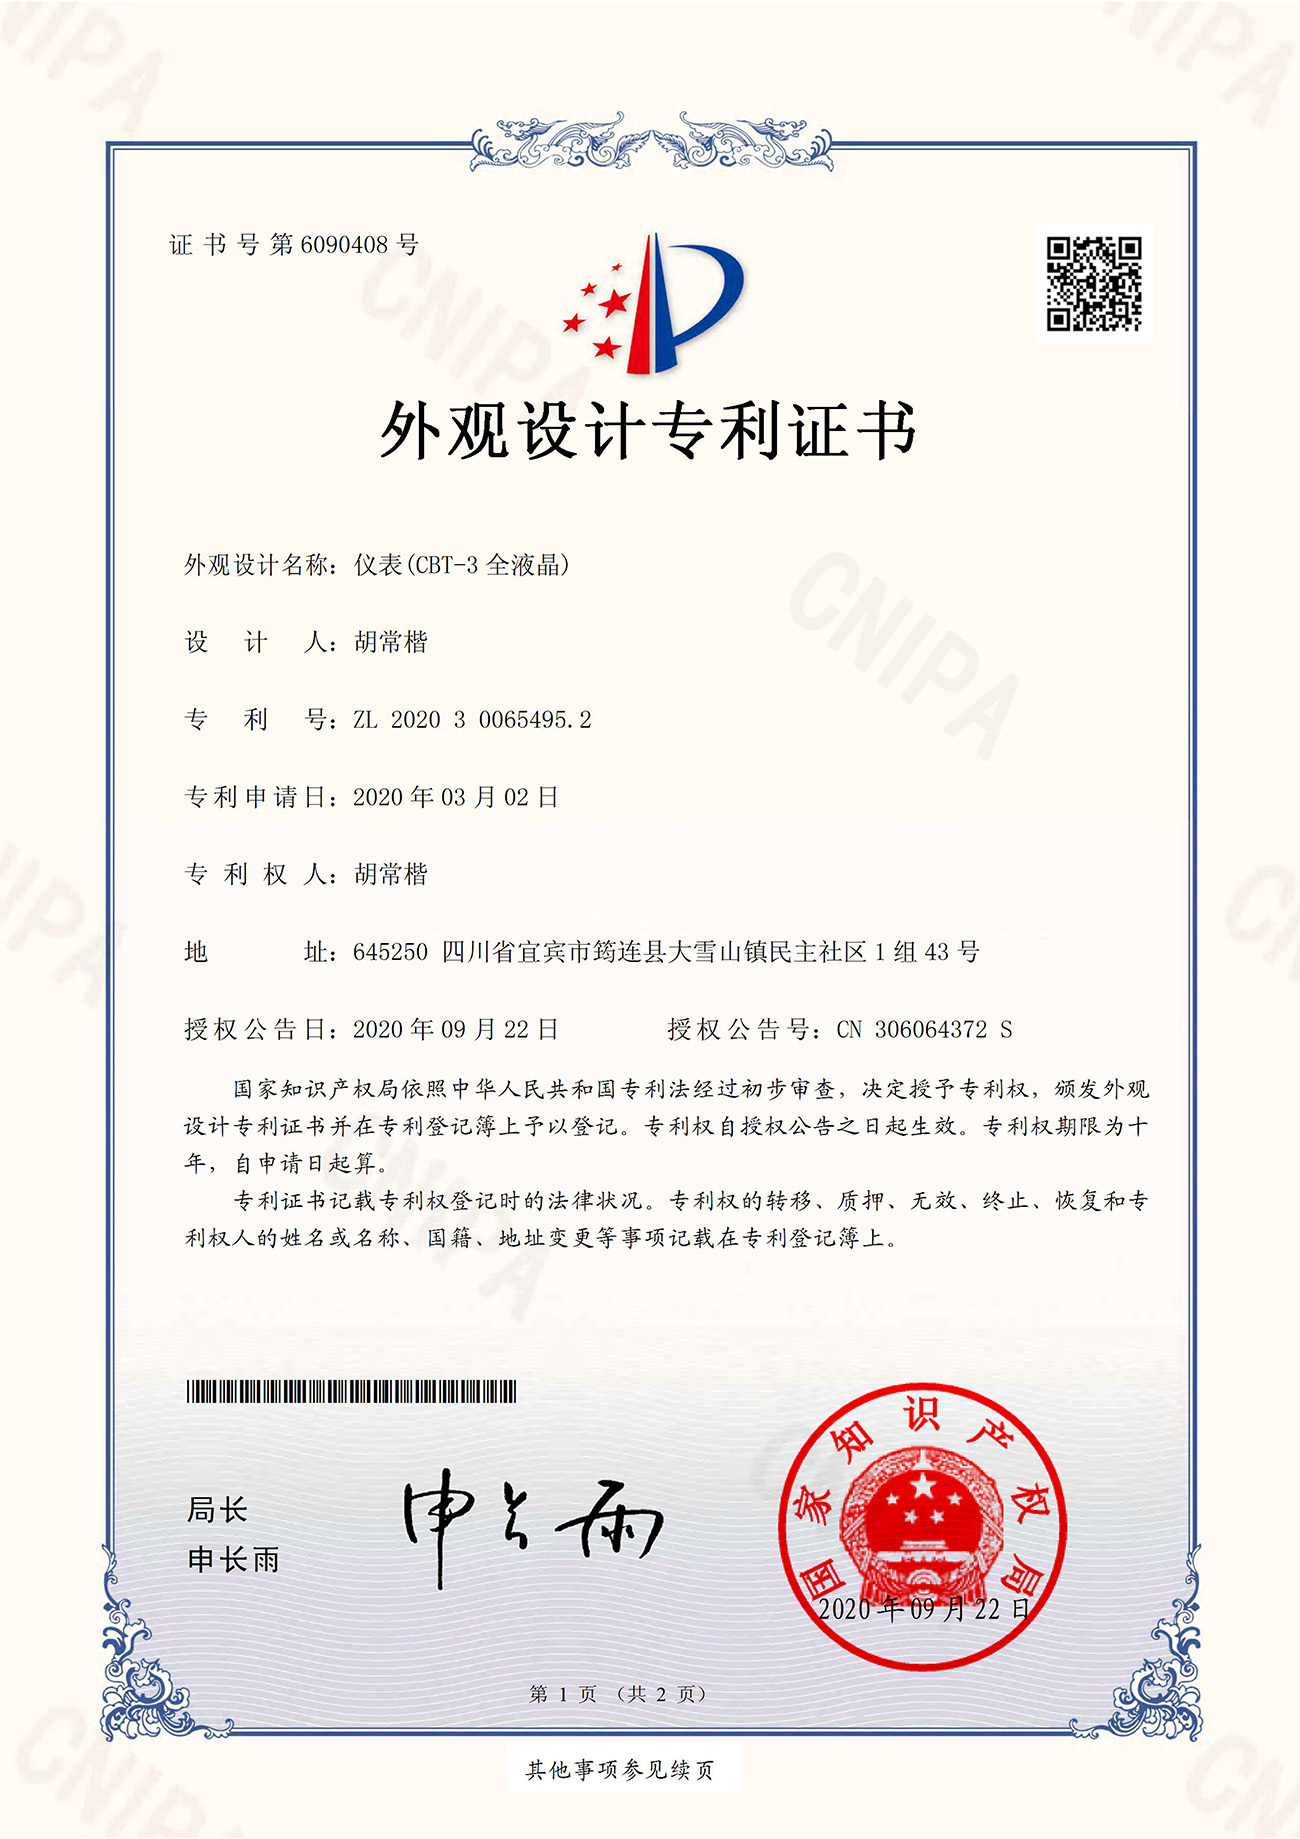 Certificate-Hu Changkai-Instrument CBT-3 Full LCD